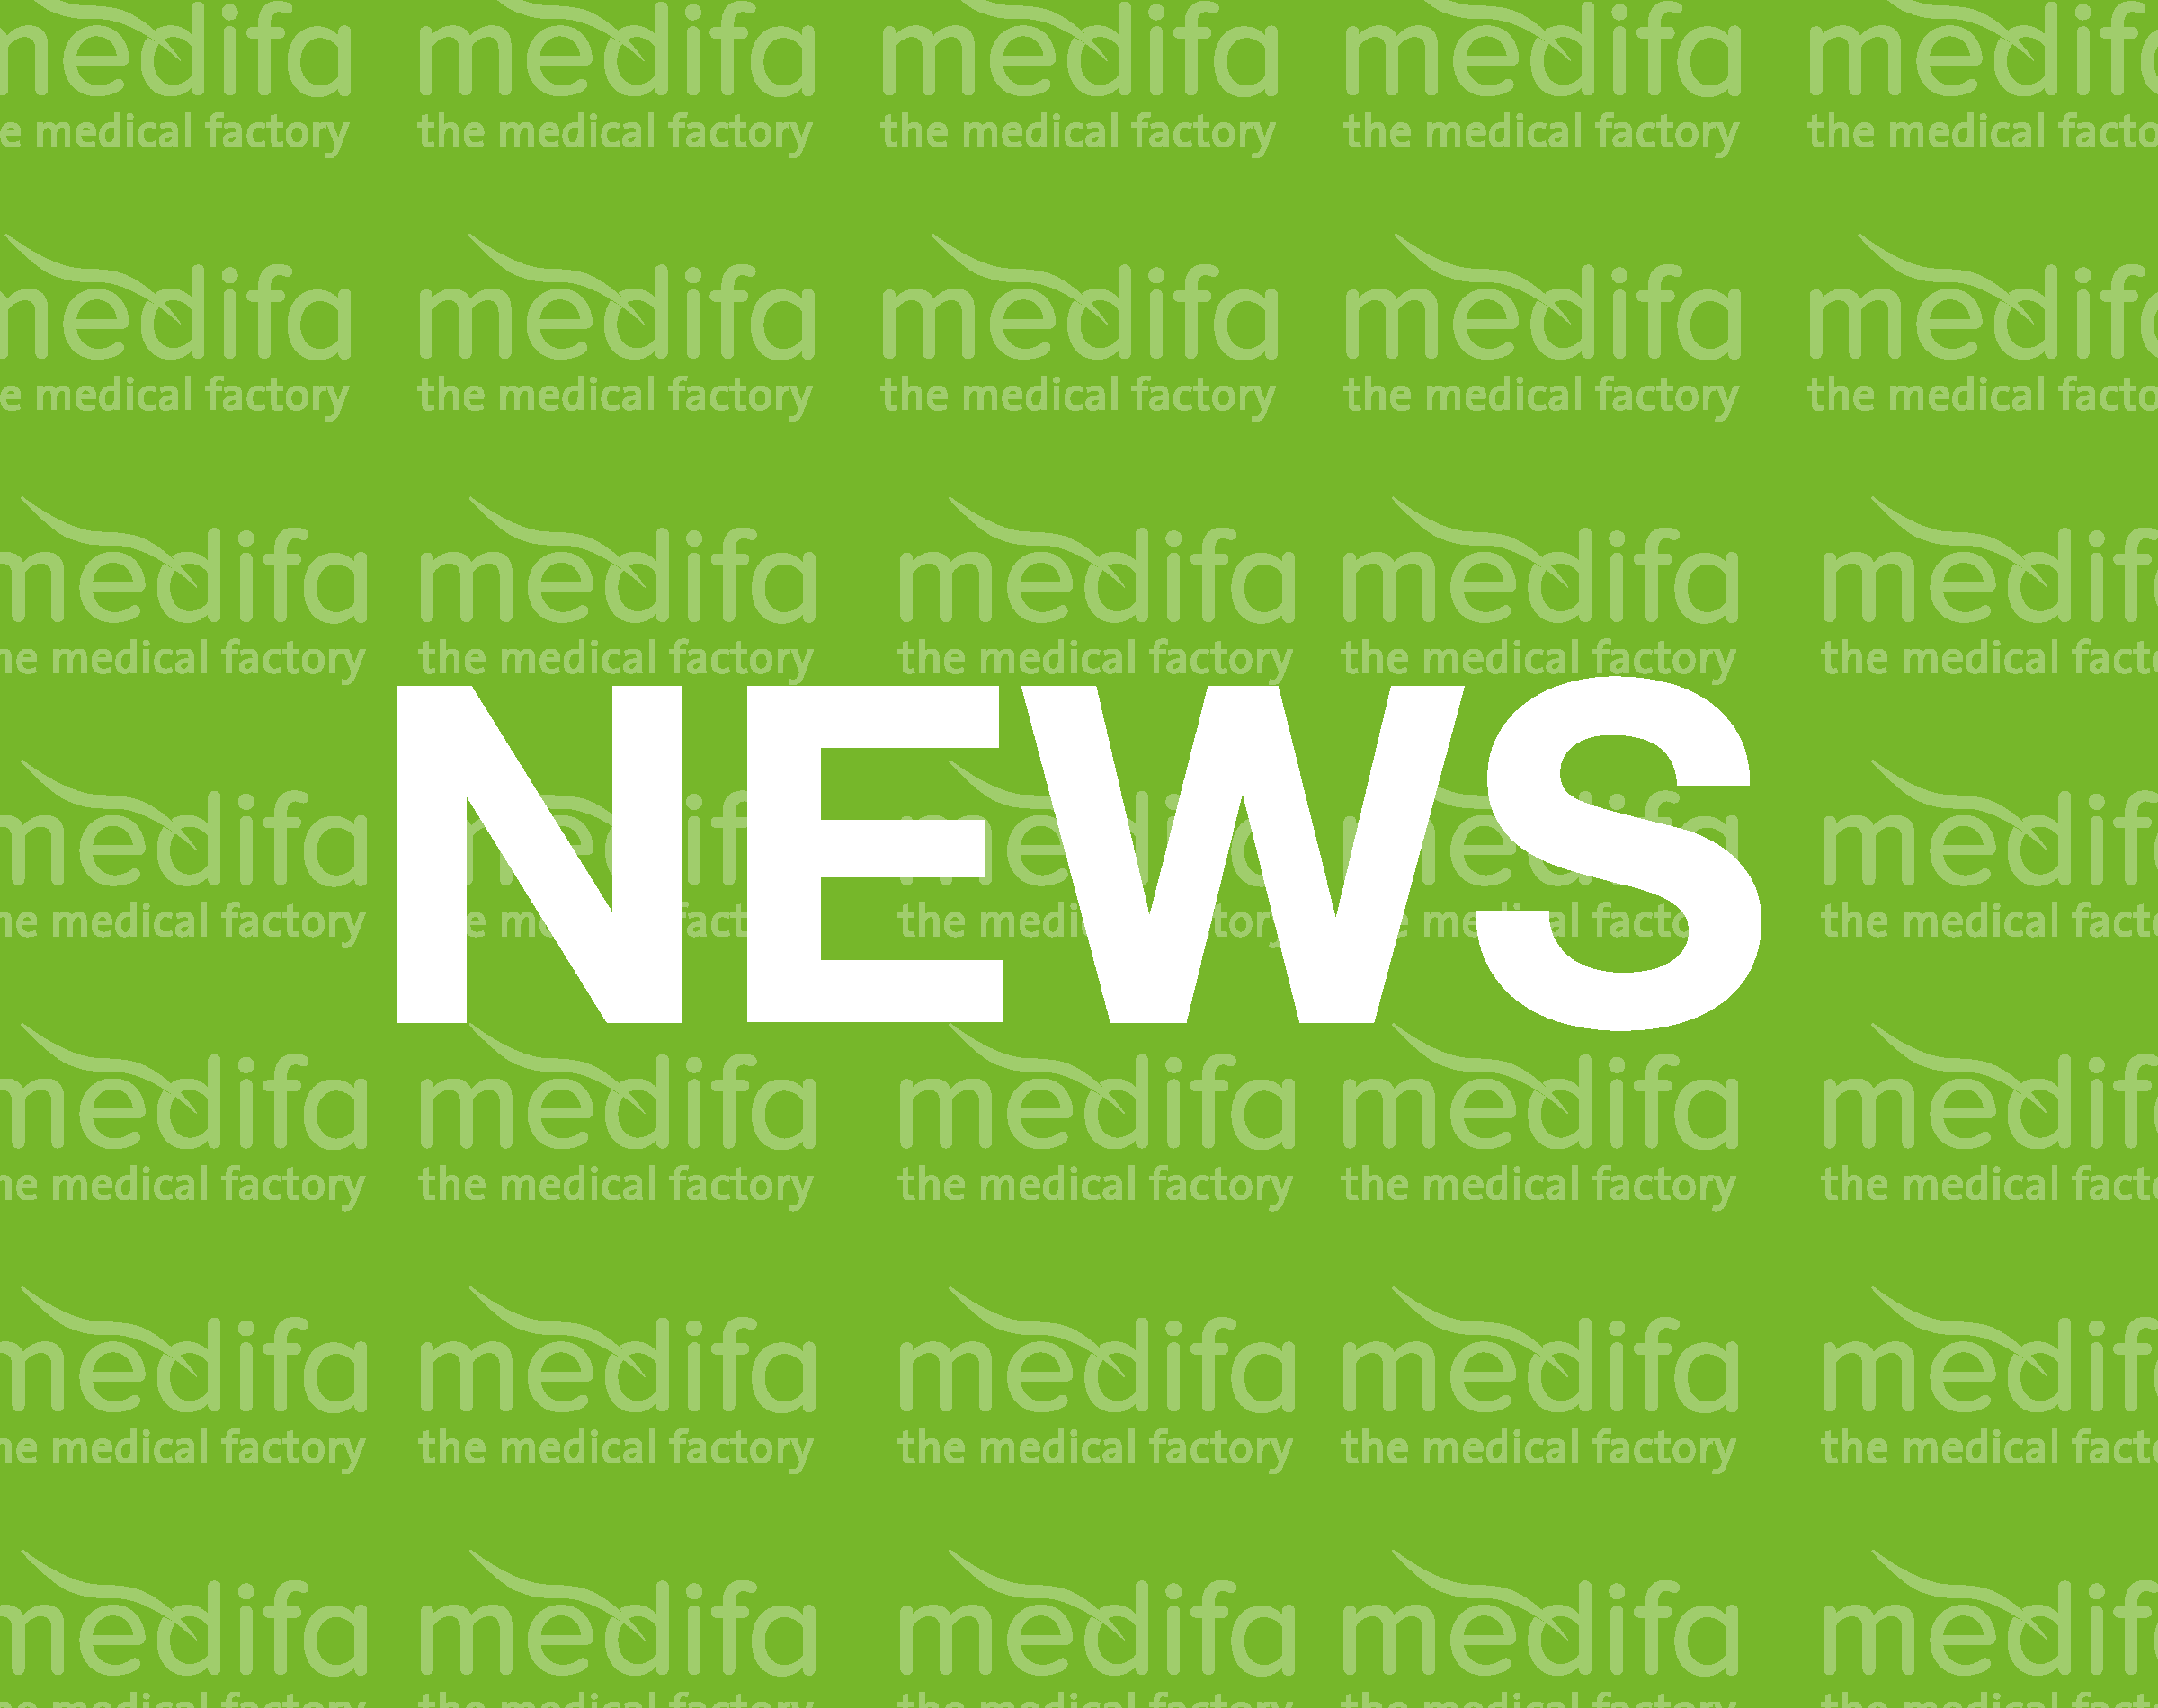 medifa continues growth path: medifa healthcare group and Cathay Capital announce international partnership